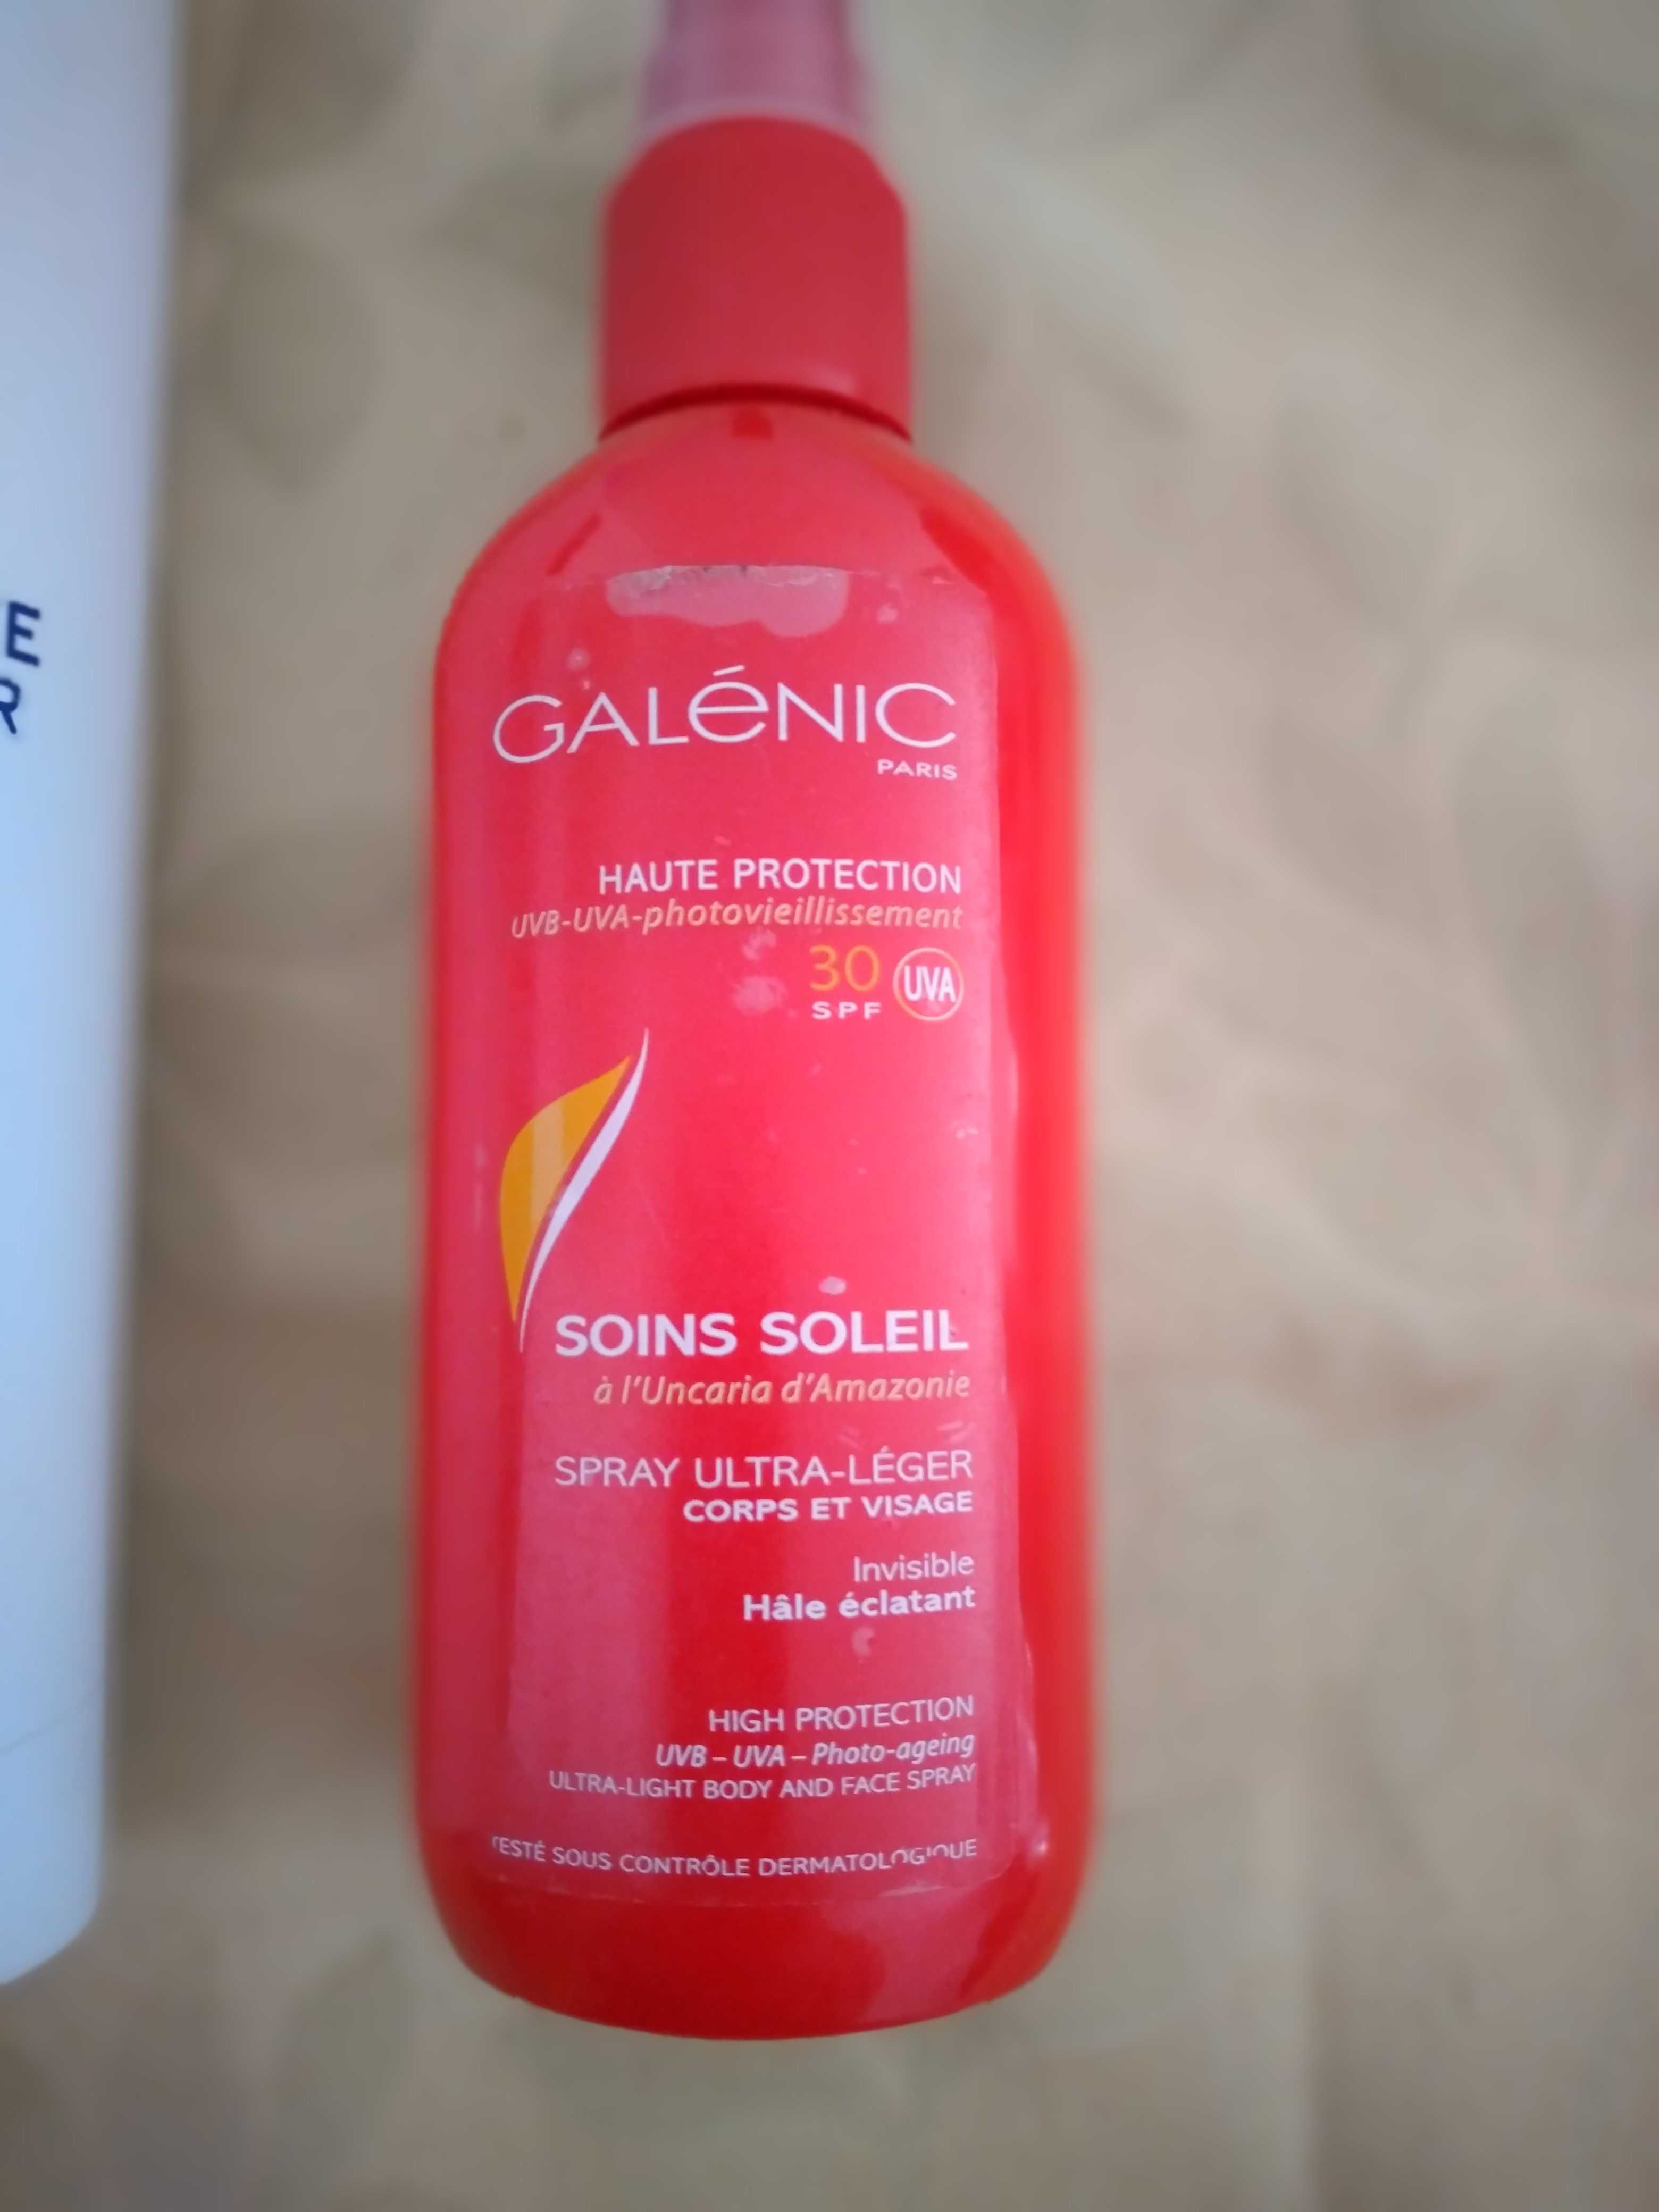 Galenic Solaire Spray Ultra Ligeiro, Spf30 + Modelador Nivea Curl